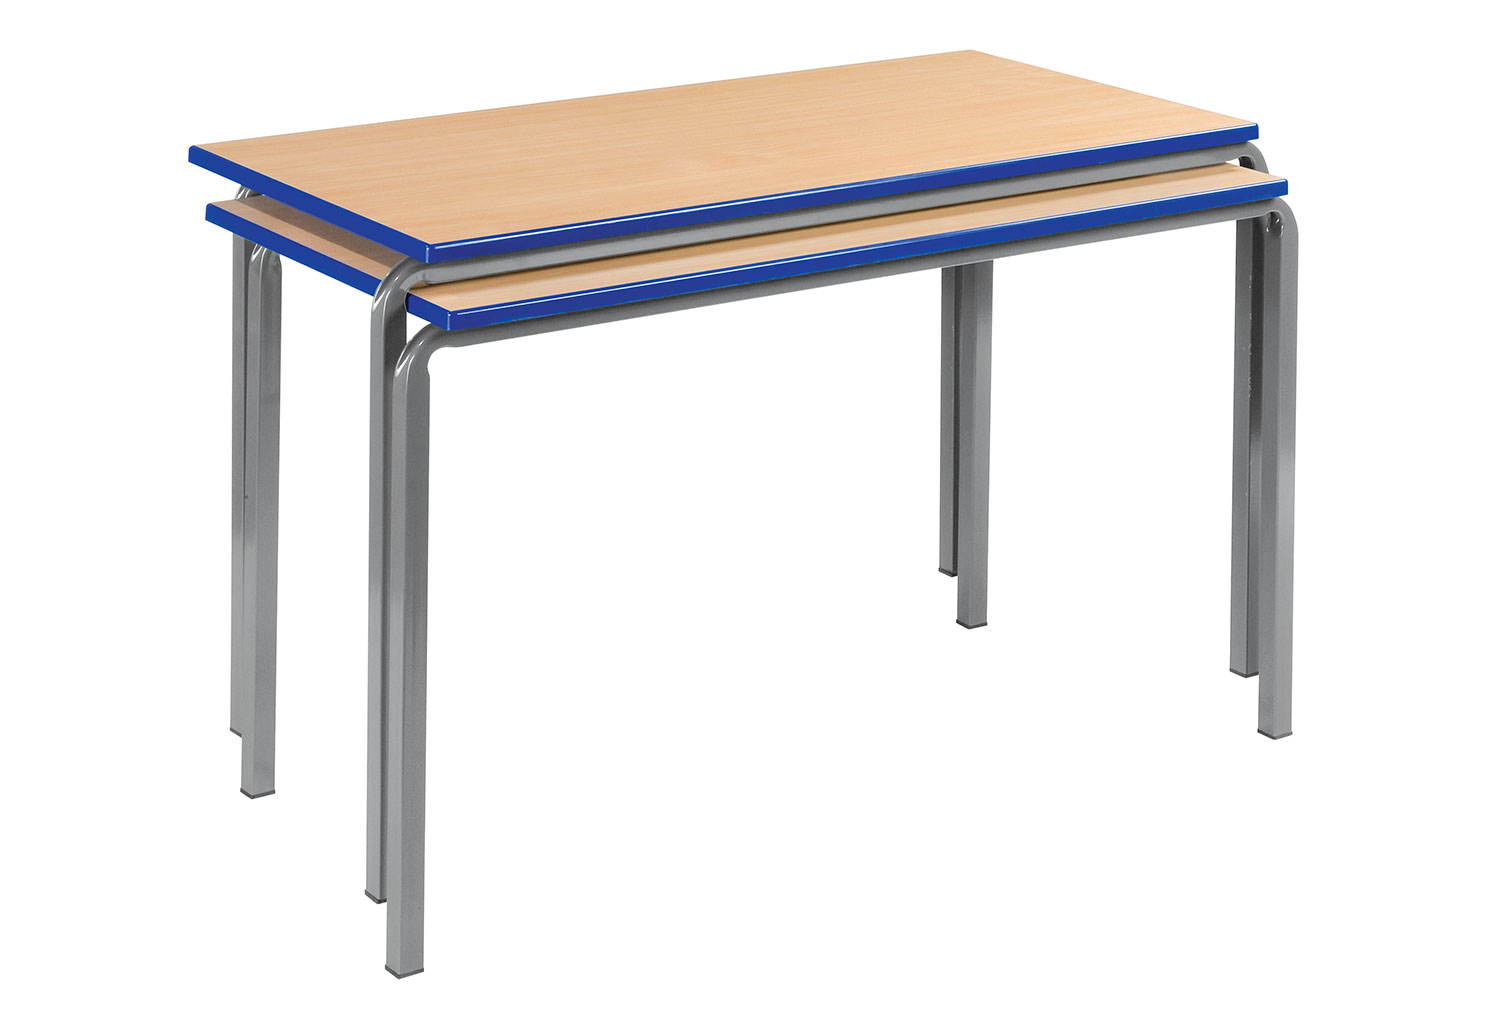 Qty 4 - Reliance Rectangular Classroom Tables 14+ Years, 120wx60dx76h (cm), Light Grey Frame, Grey Top, PU Blue Edge